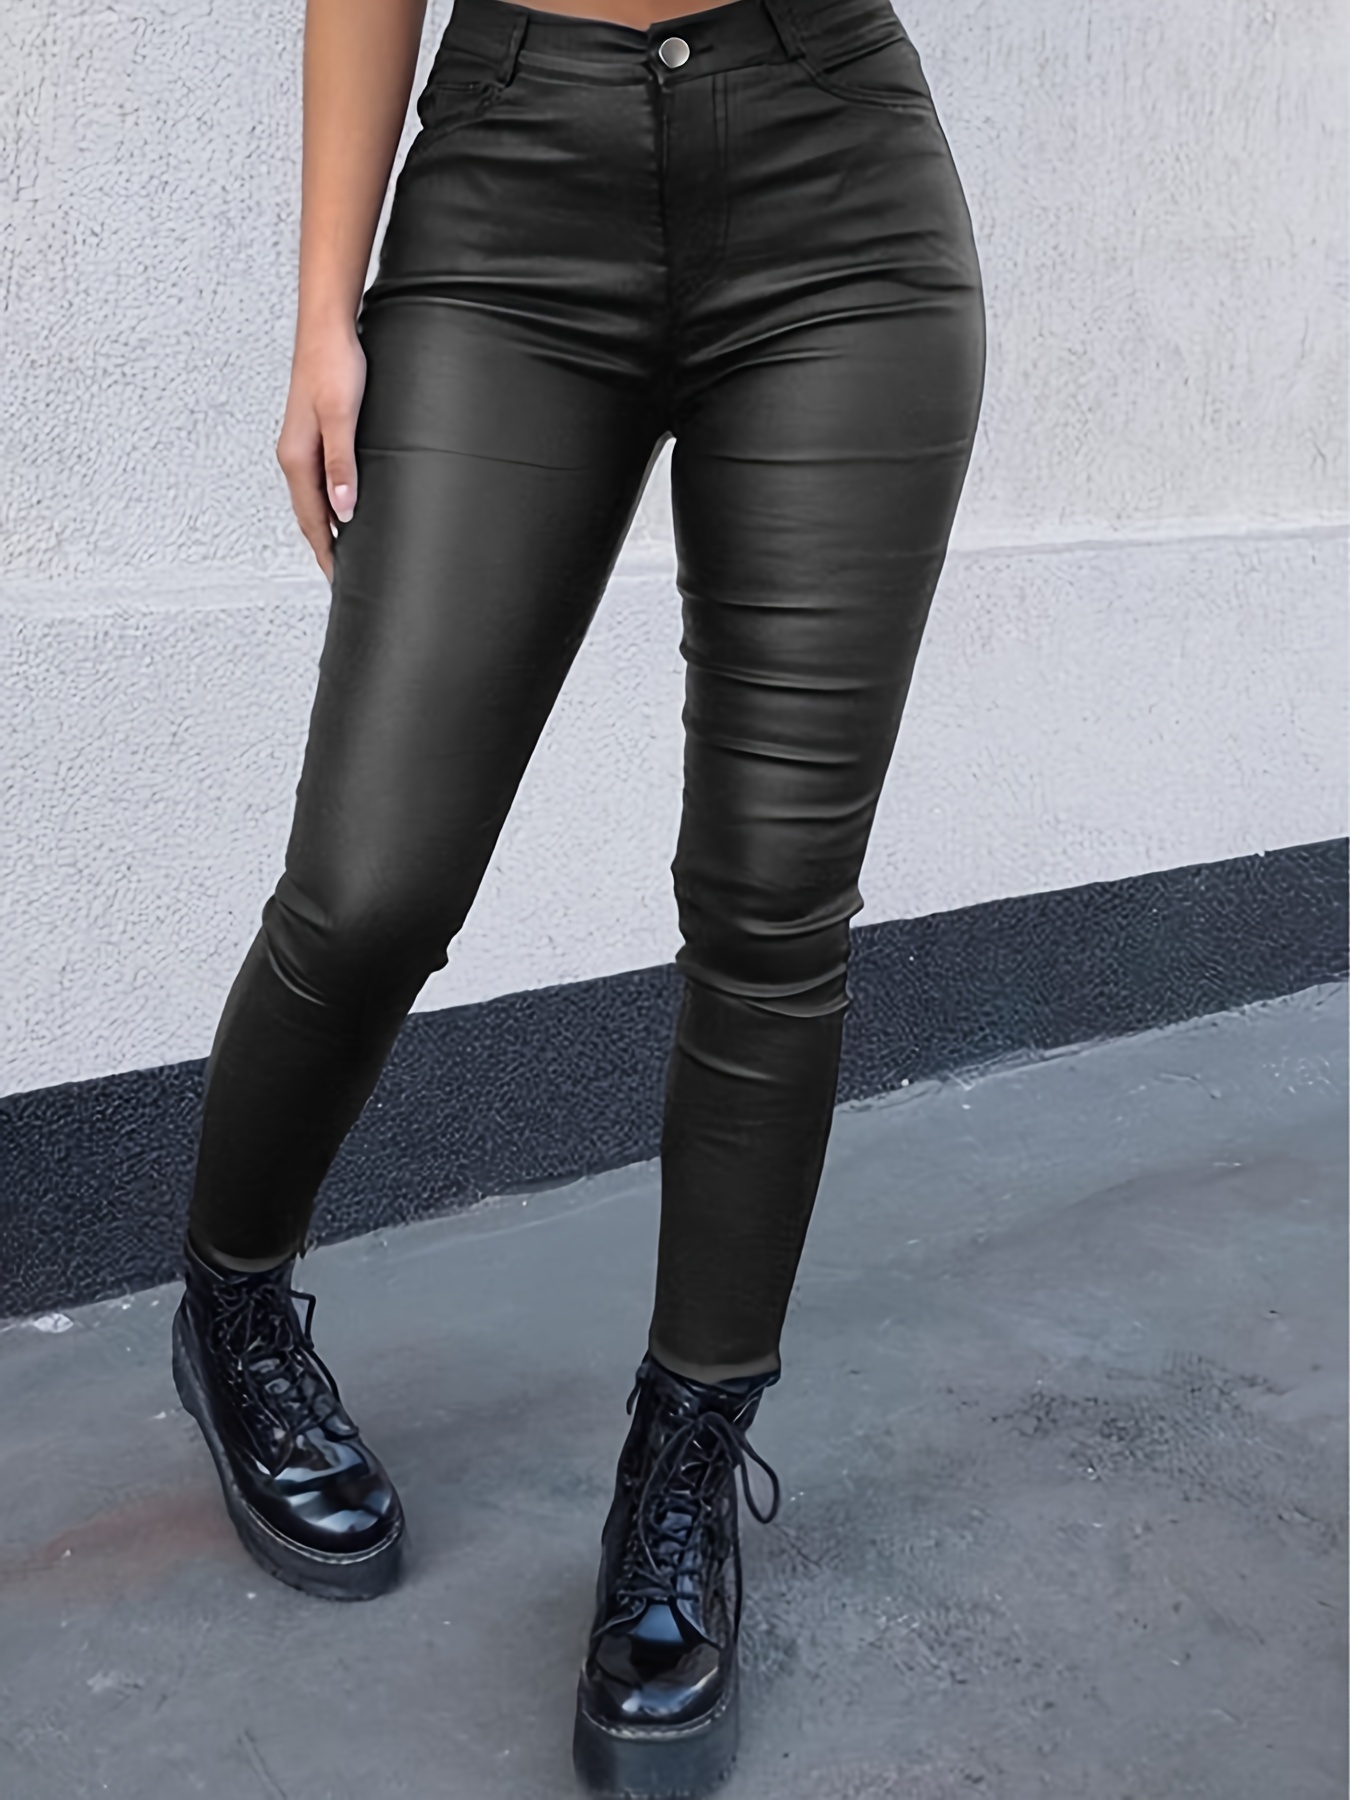 Jean Style 5 pocket Women black leather Pants